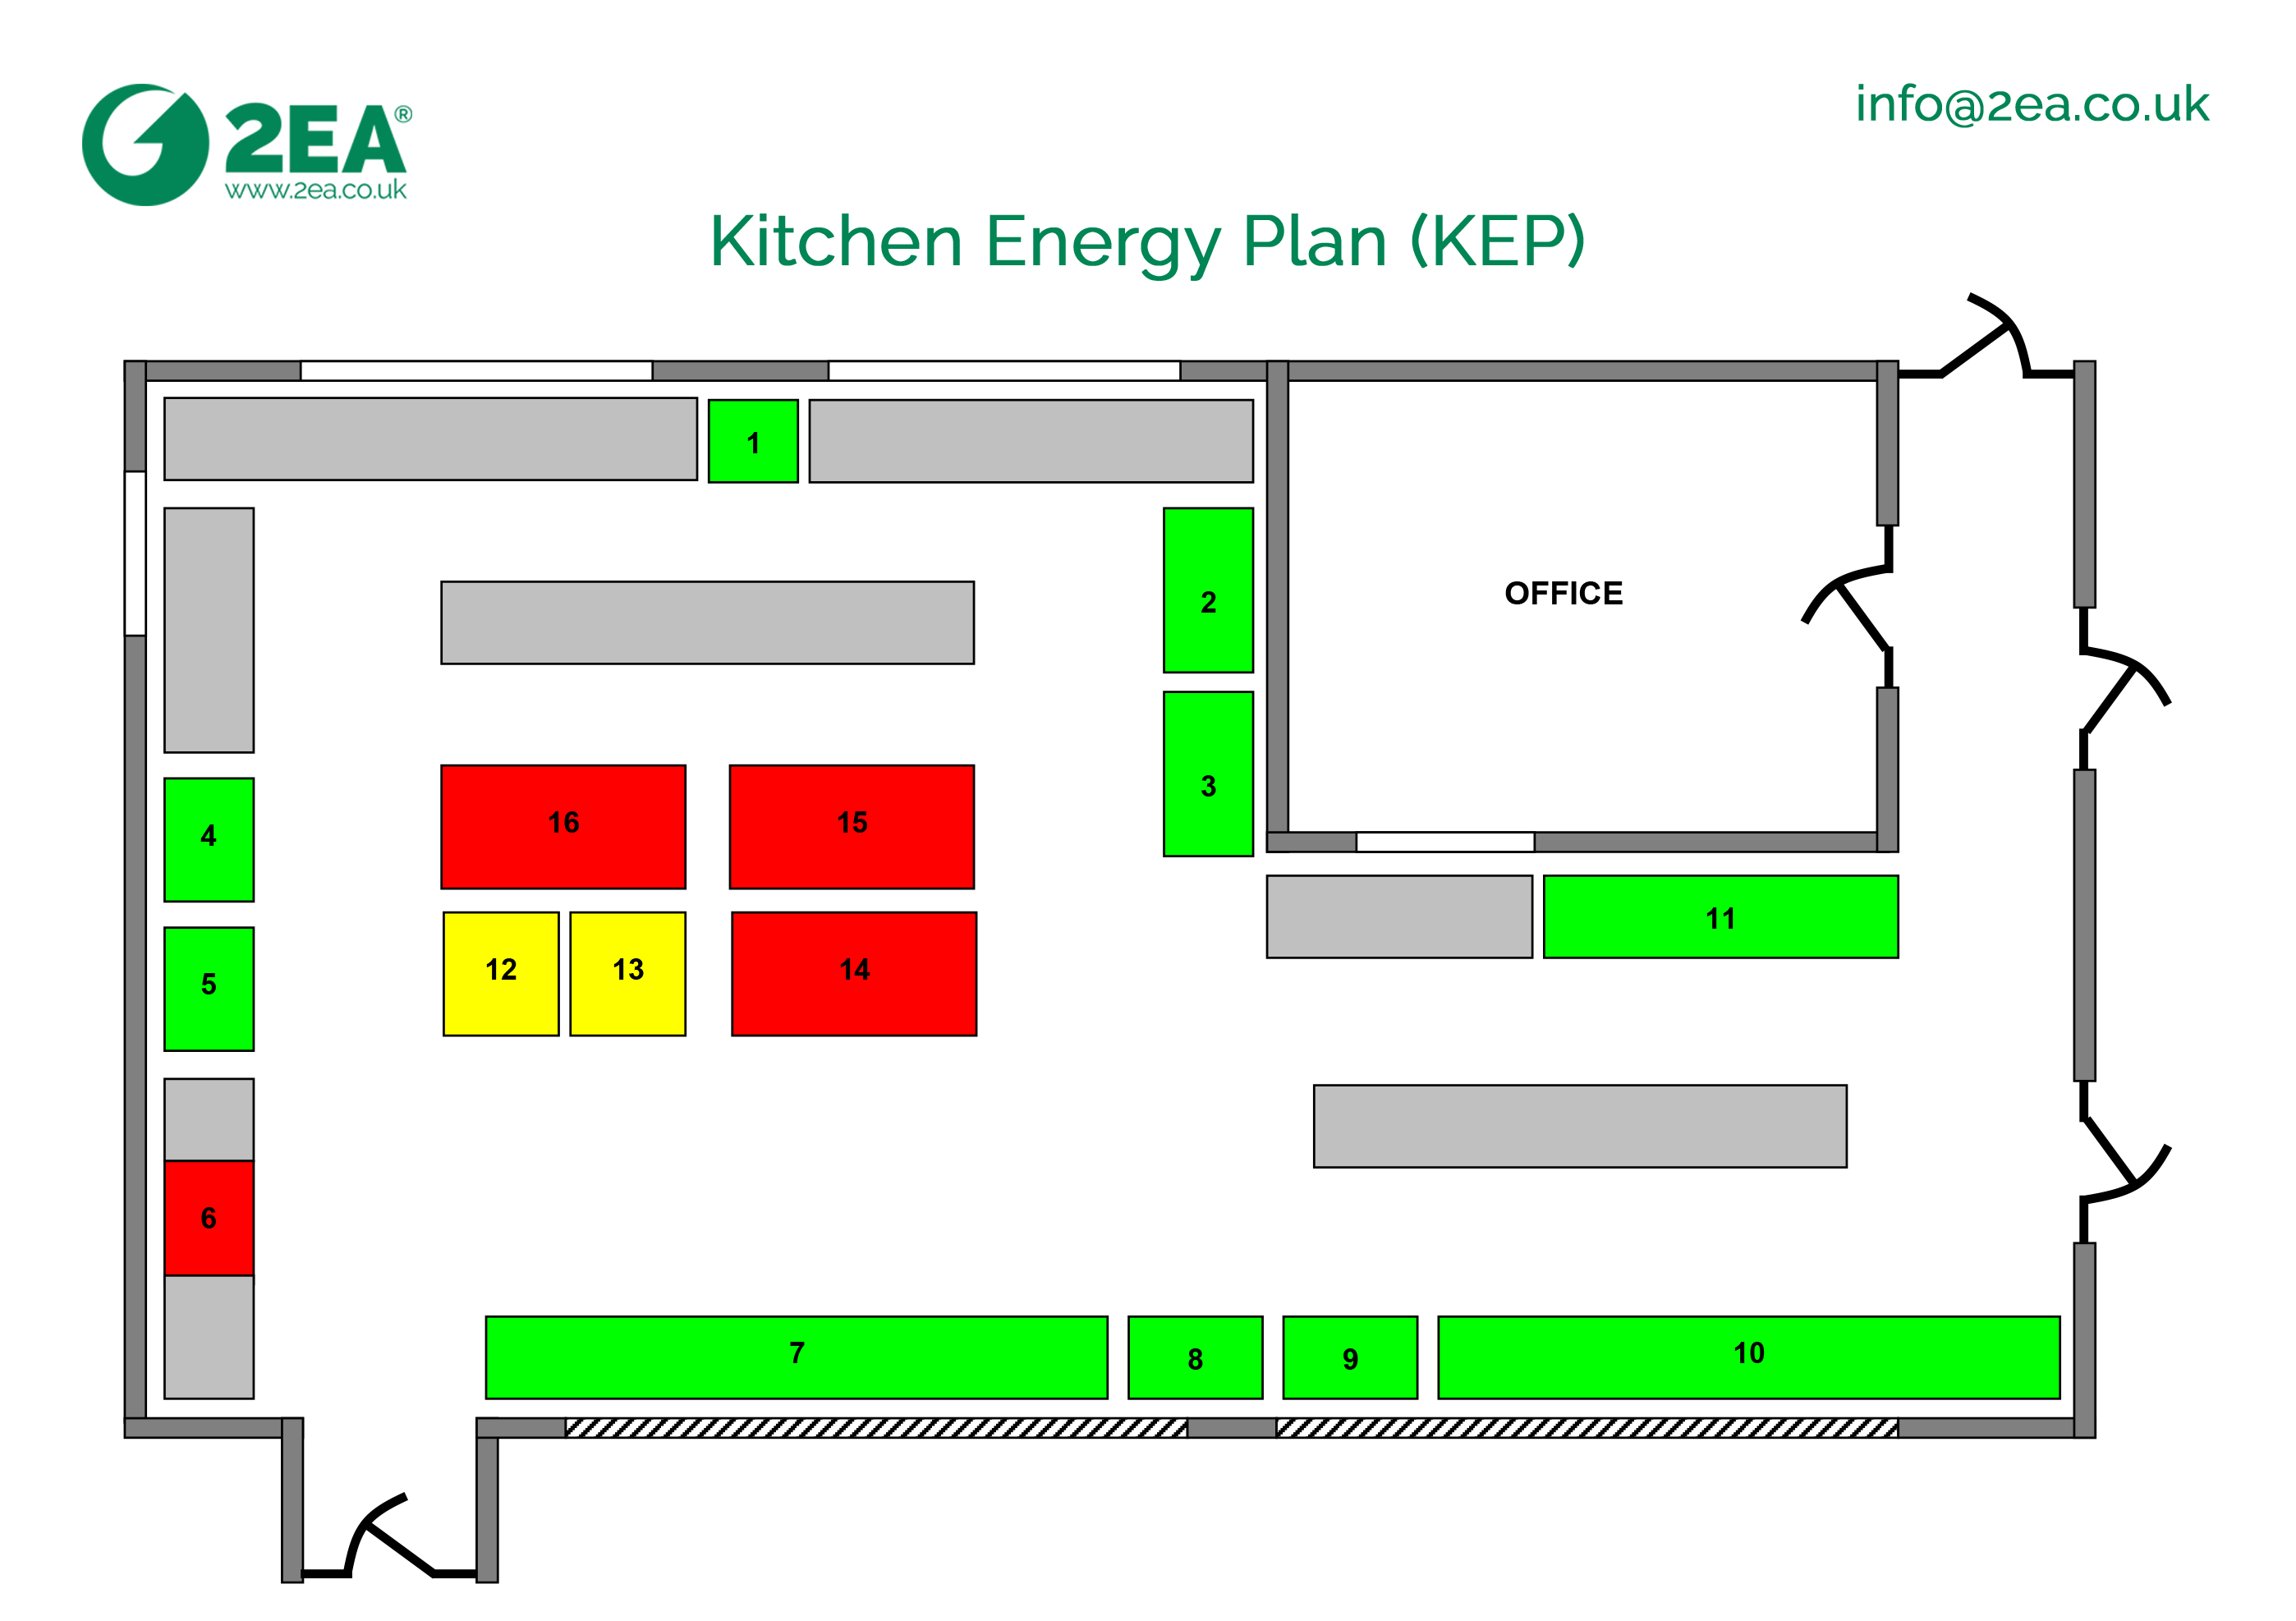 Kitchen Energy Plan (KEP